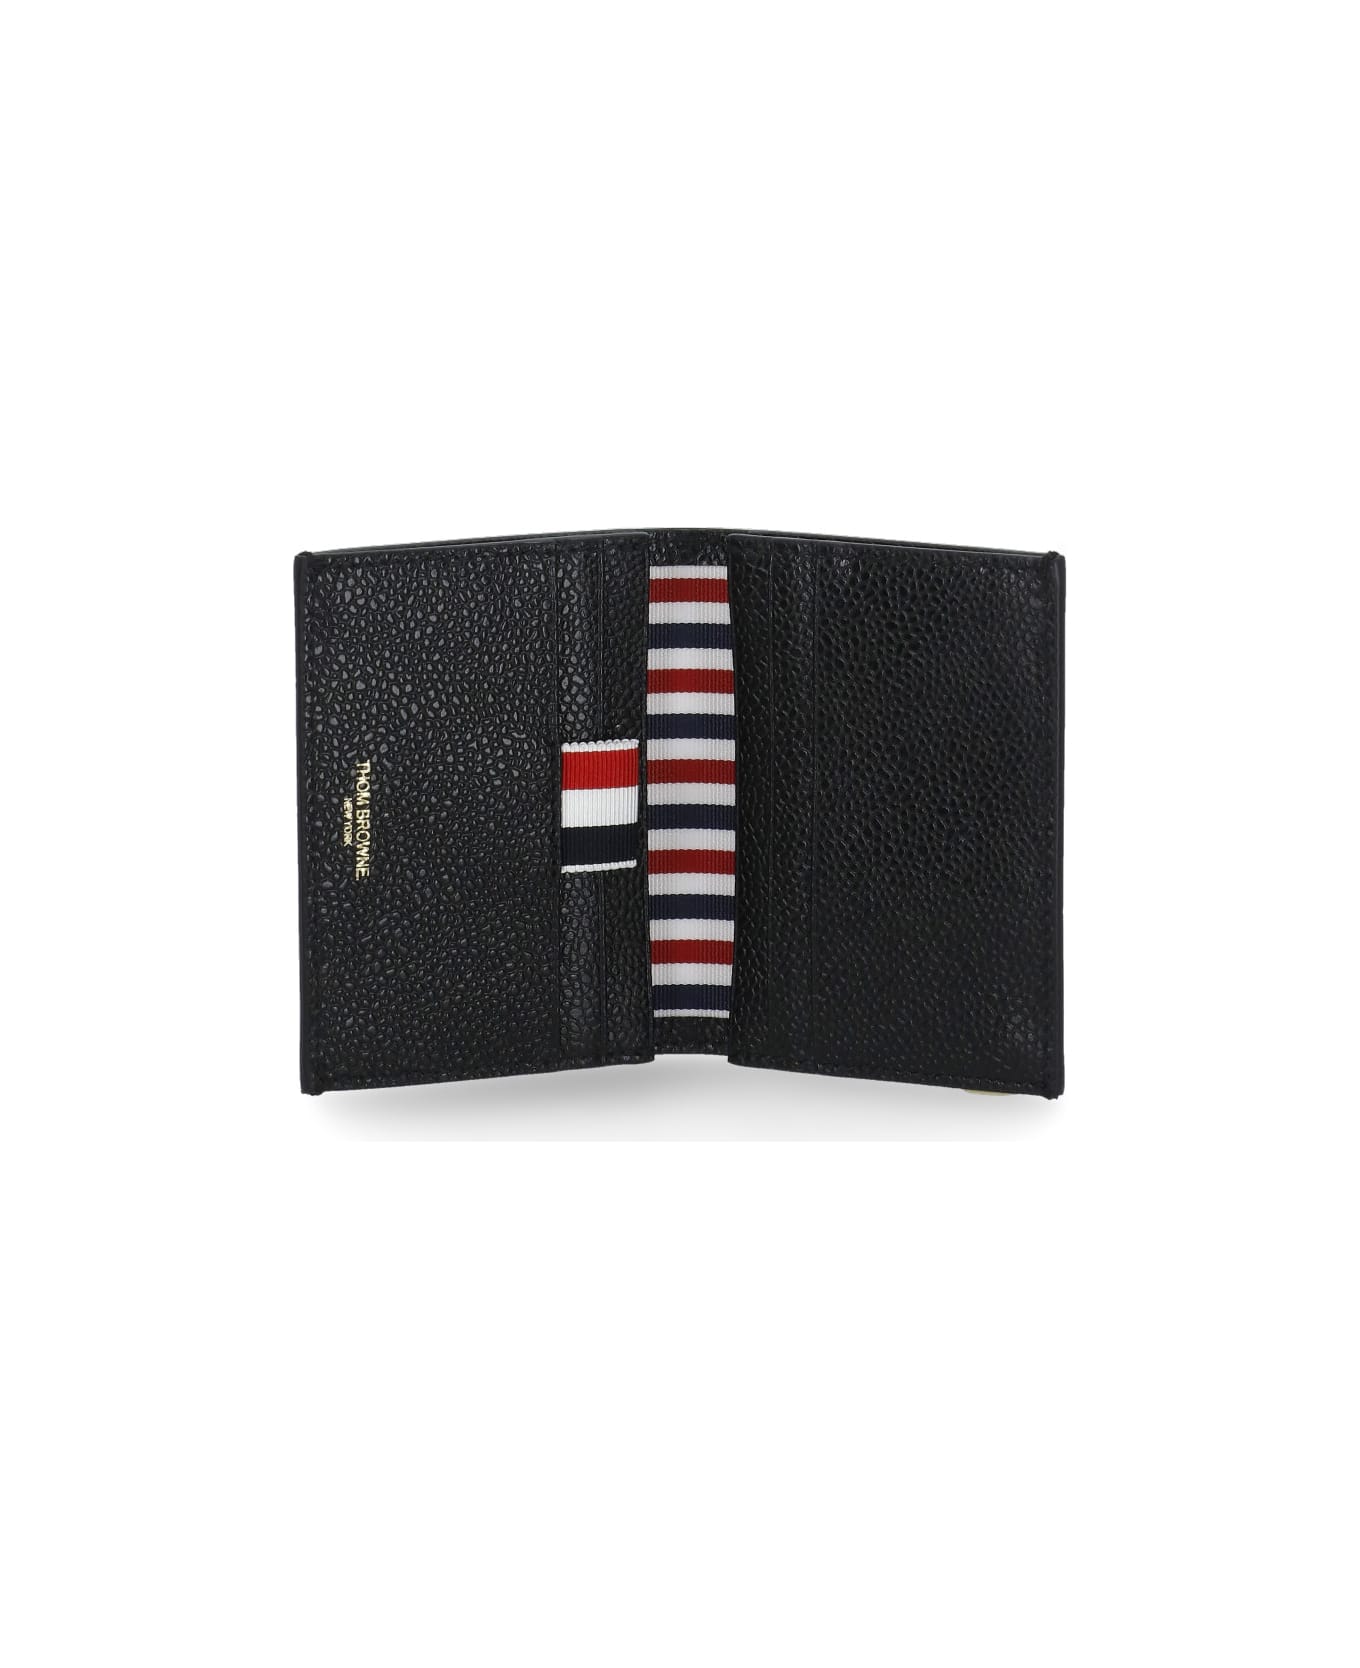 Thom Browne Pebble Leather Card Holder - Black